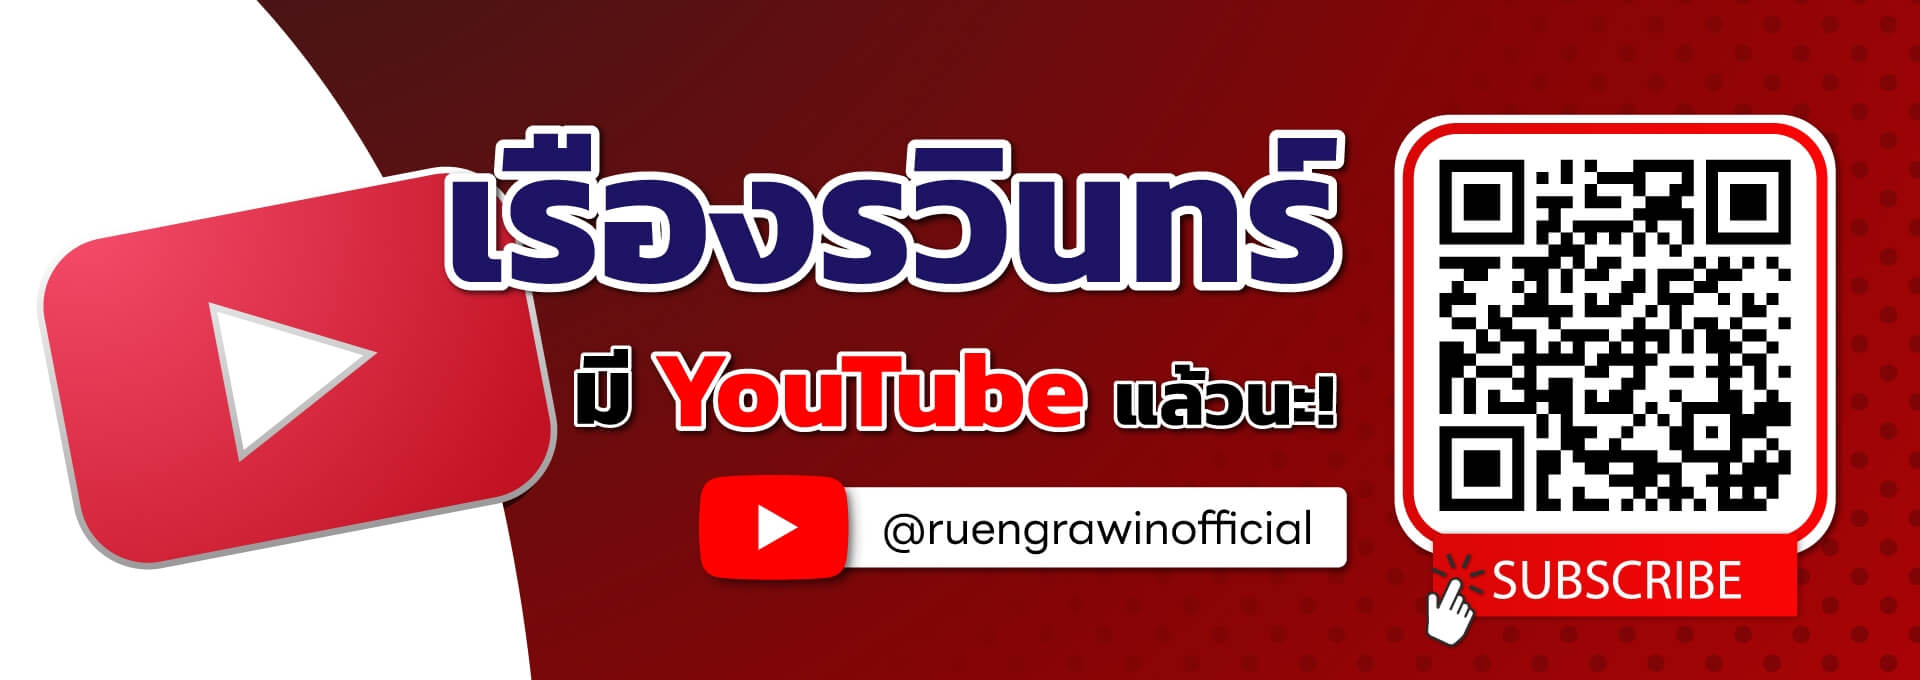 Ruengrawin YouTube Channel